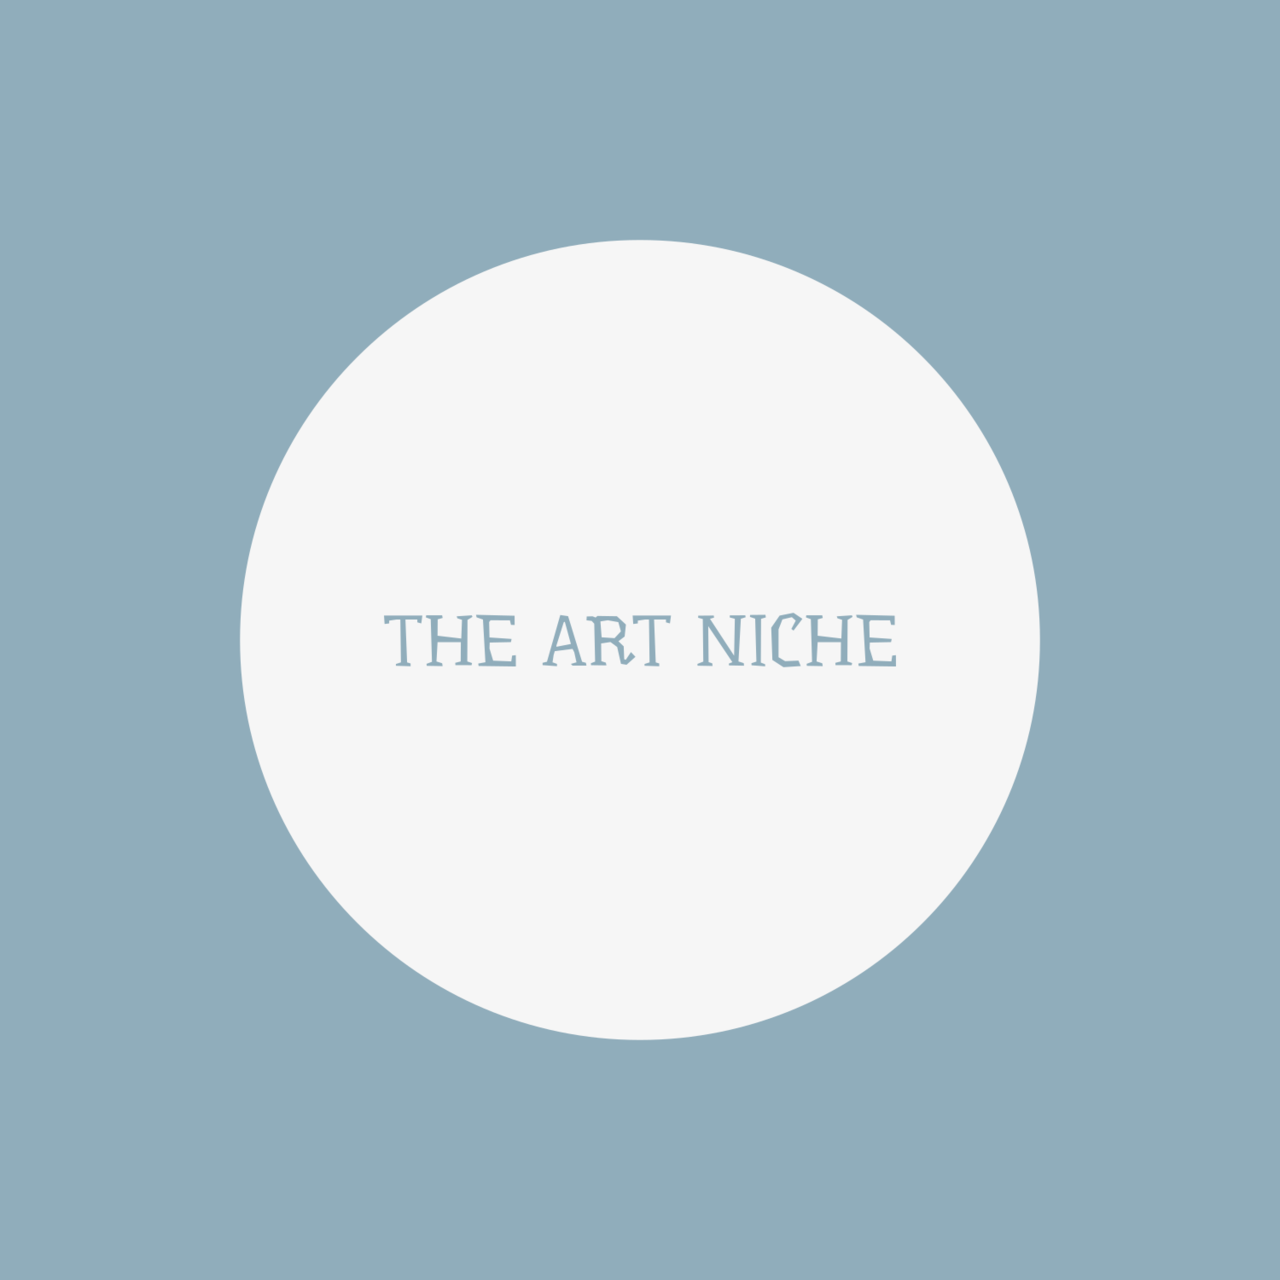 The Art Niche